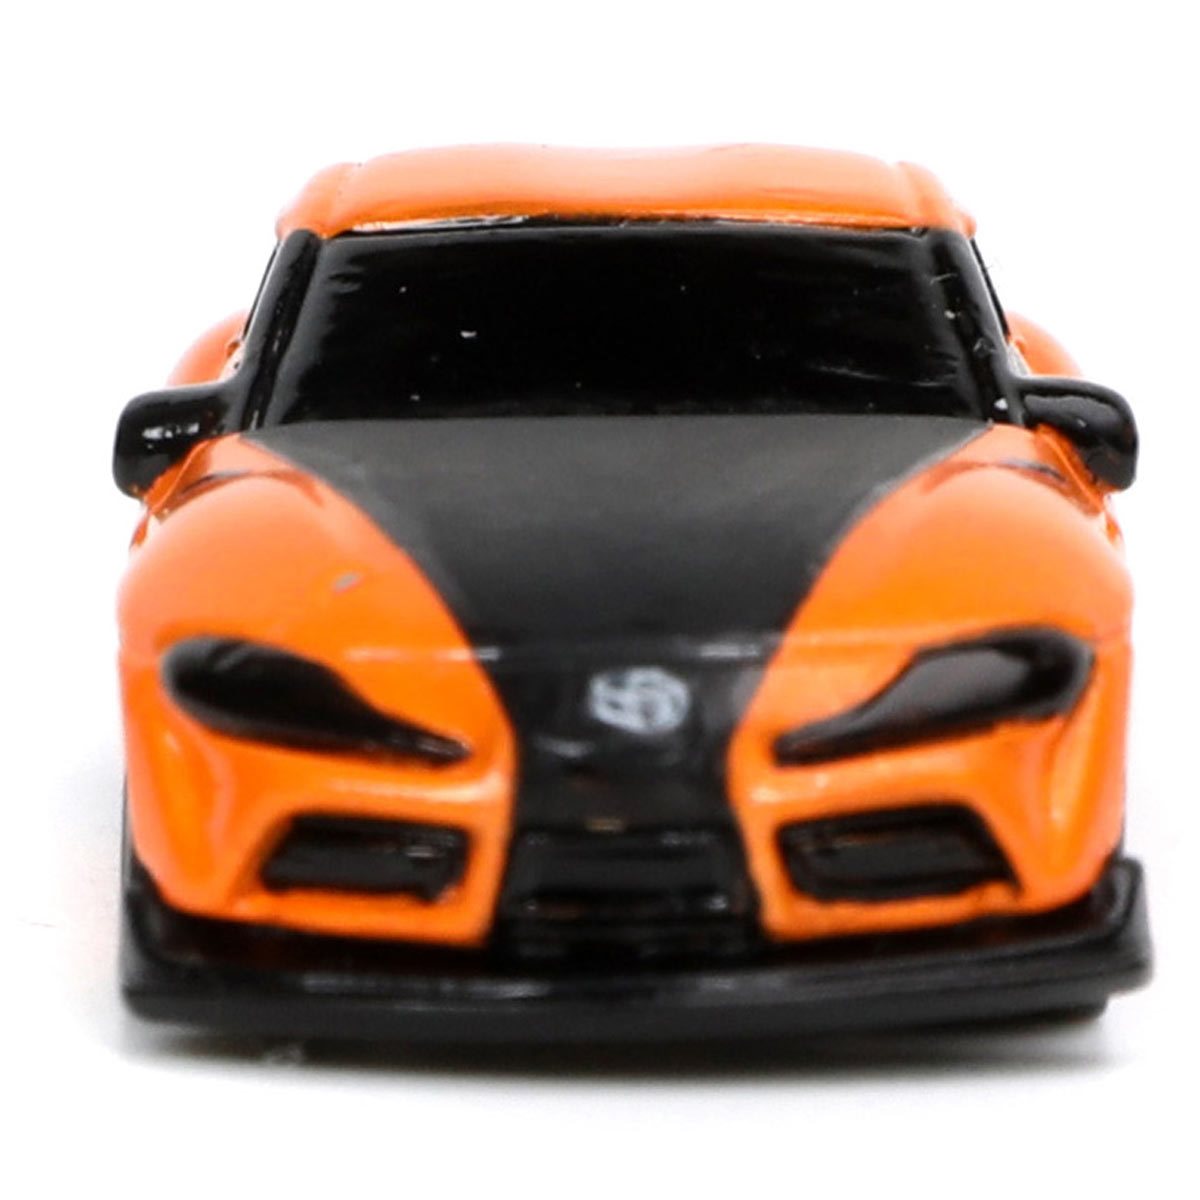 Jada Toys Nano Hollywood Rides Fast & Furious 3 PK F9, Black